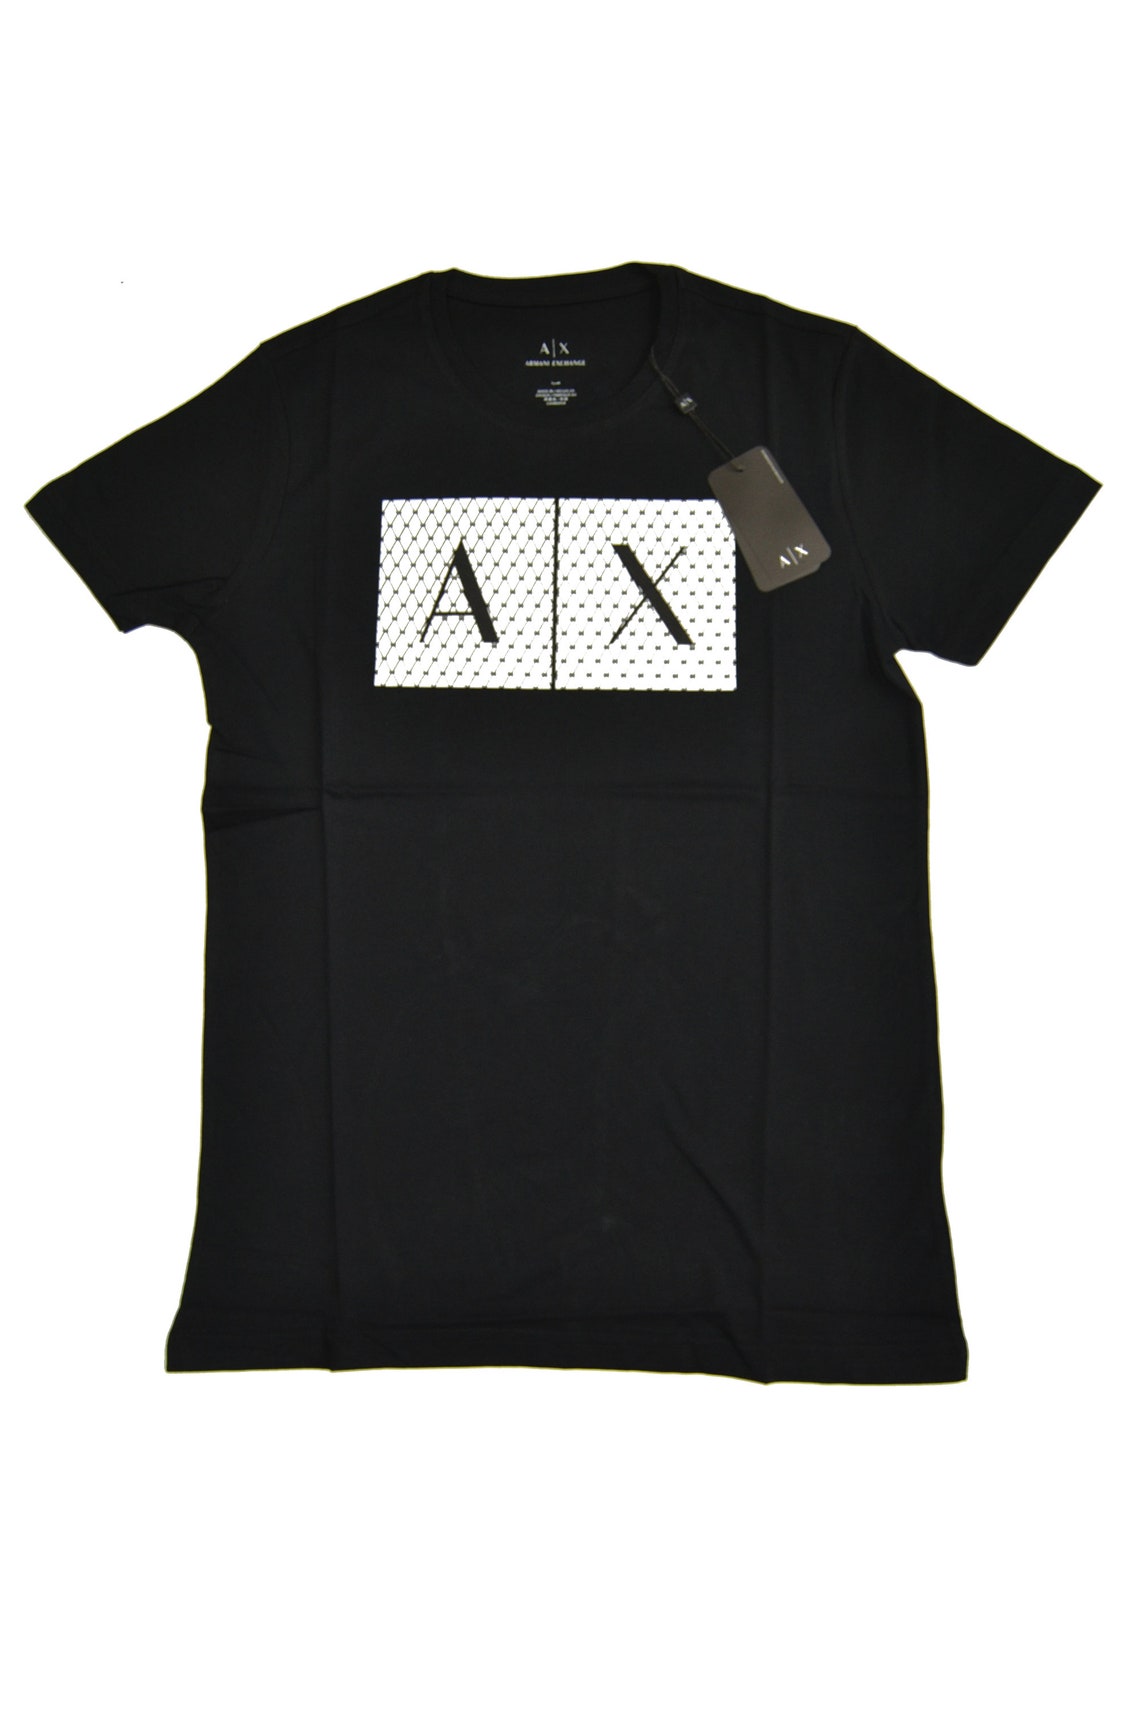 Vintage Armani Exchange AX Black Men T Shirt Technical Logo | Etsy